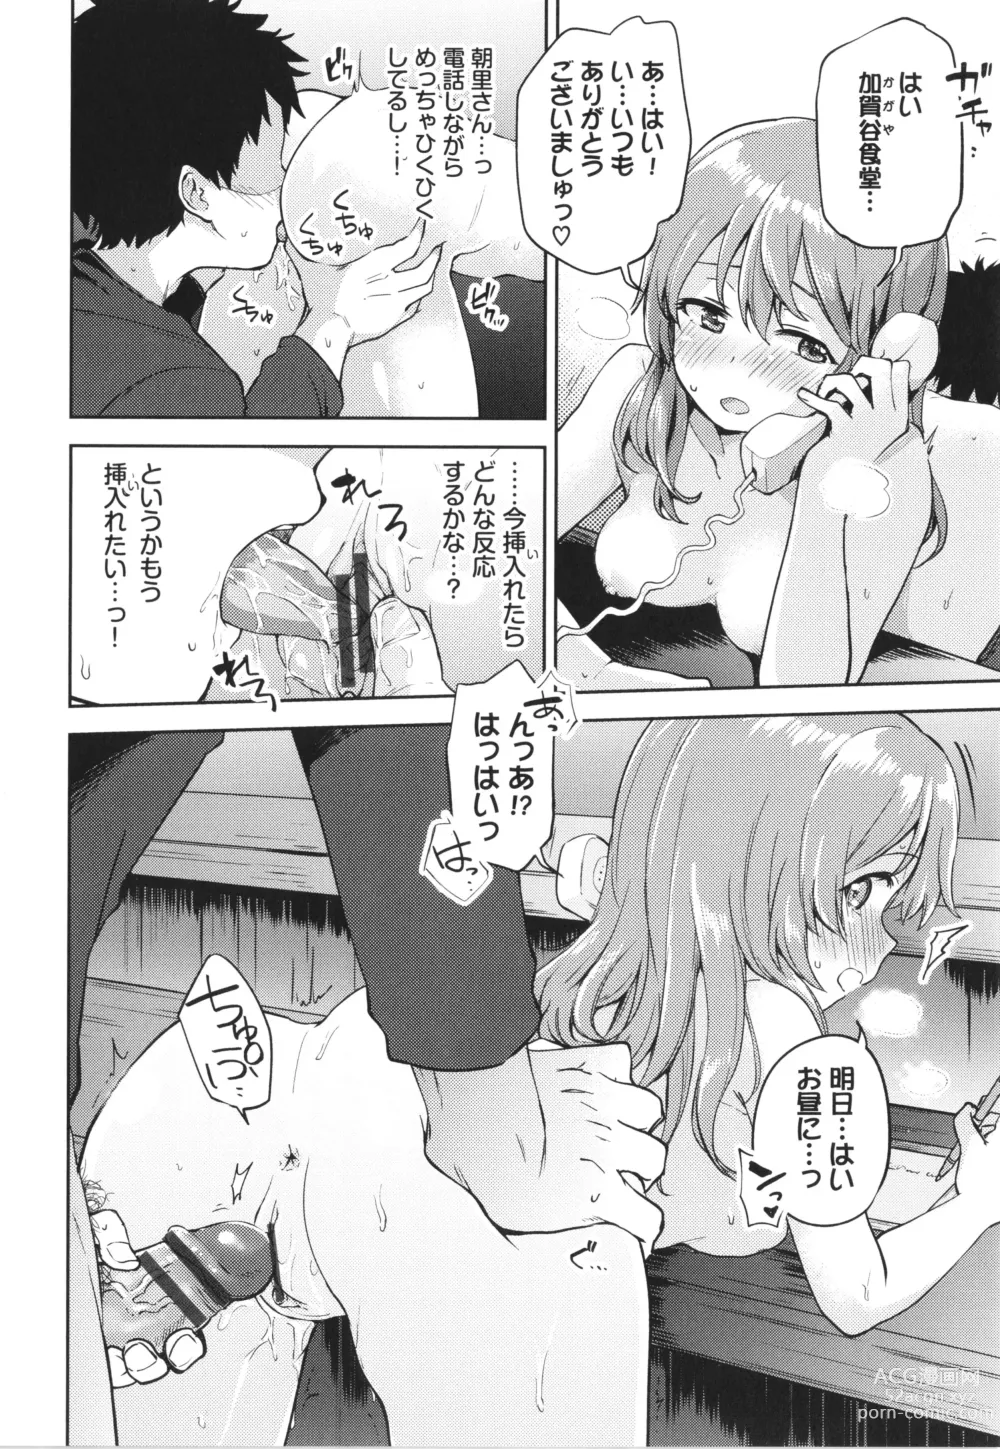 Page 185 of manga Secret Time